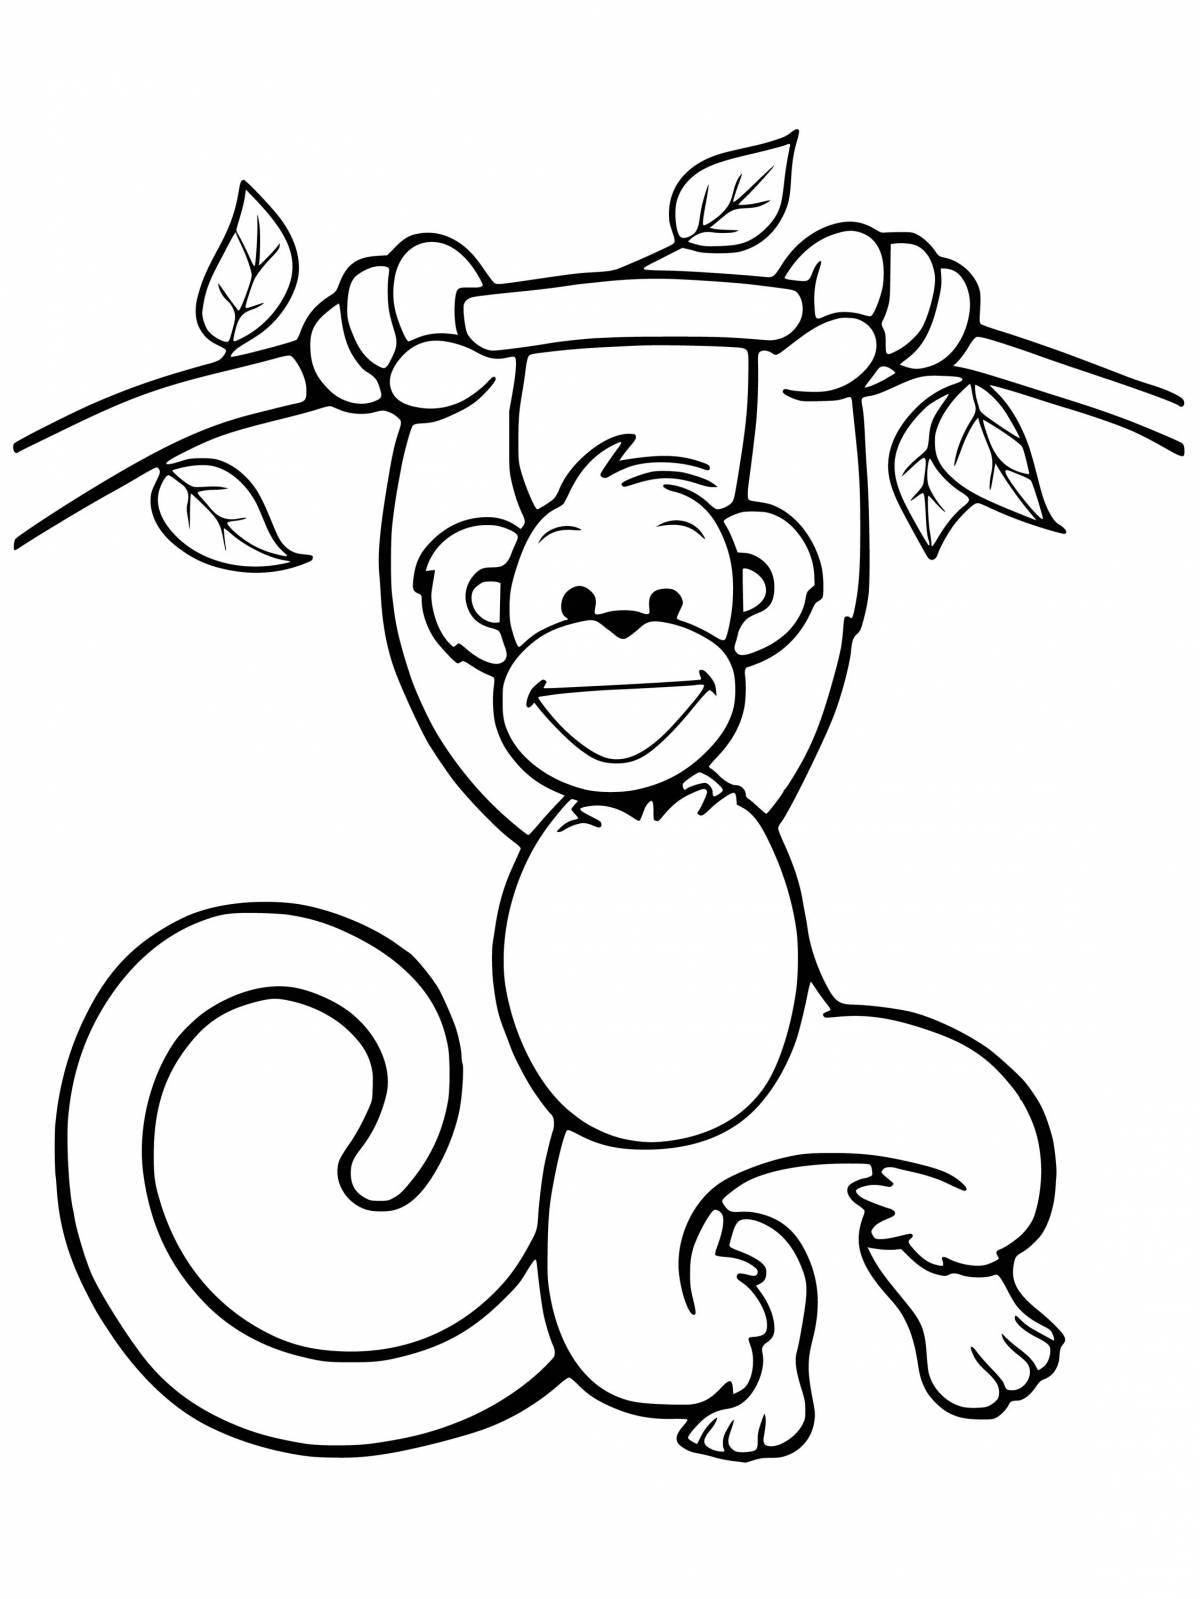 Coloring cute monkey